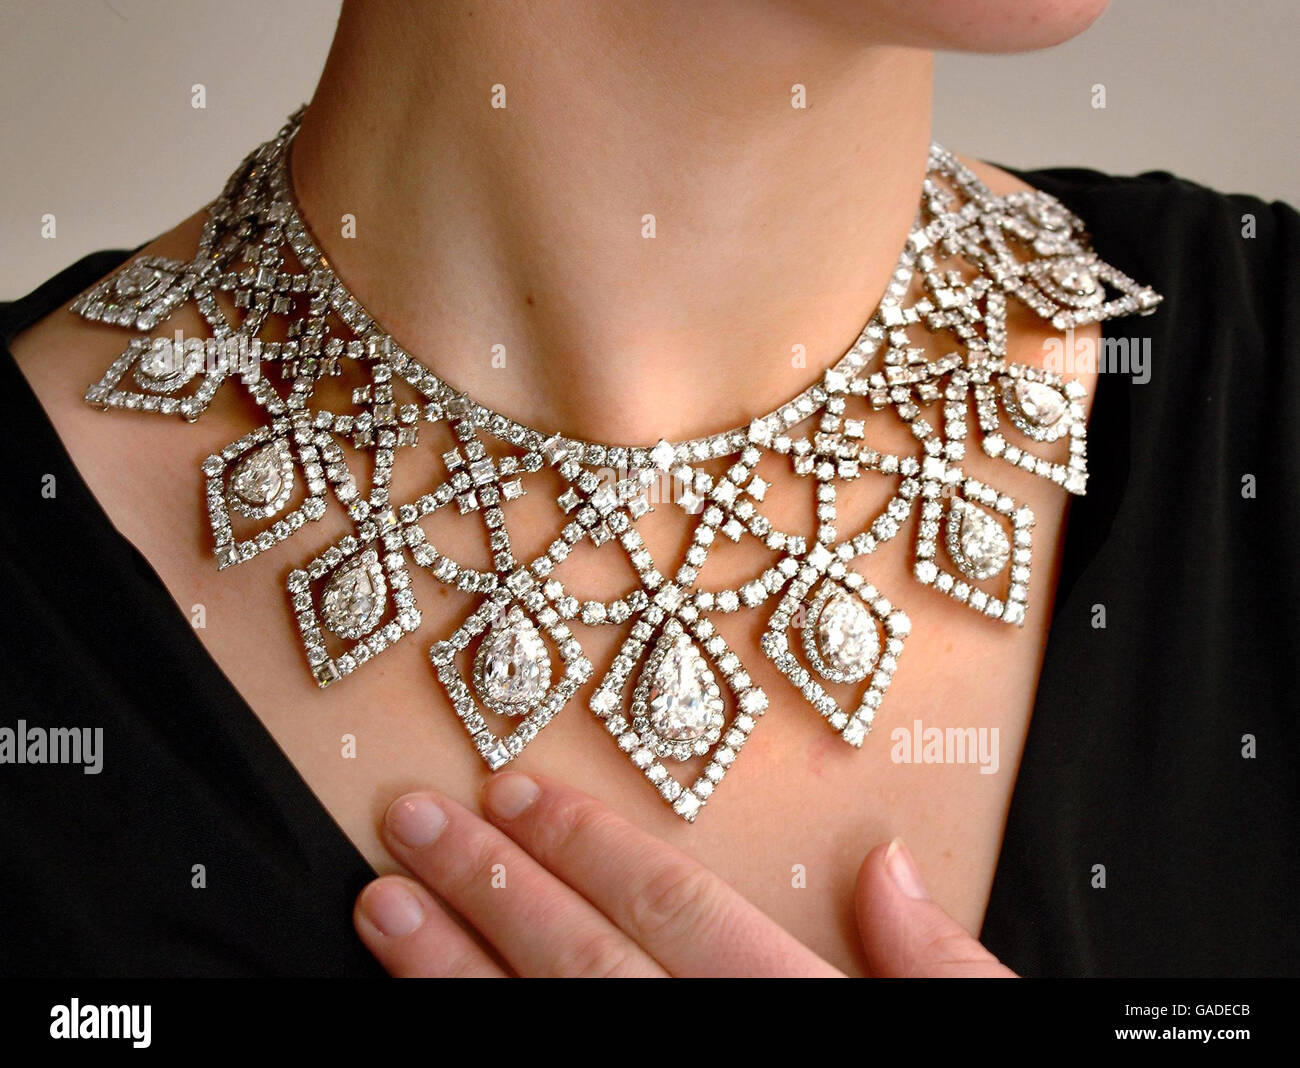 Cartier necklace auction Stock Photo 